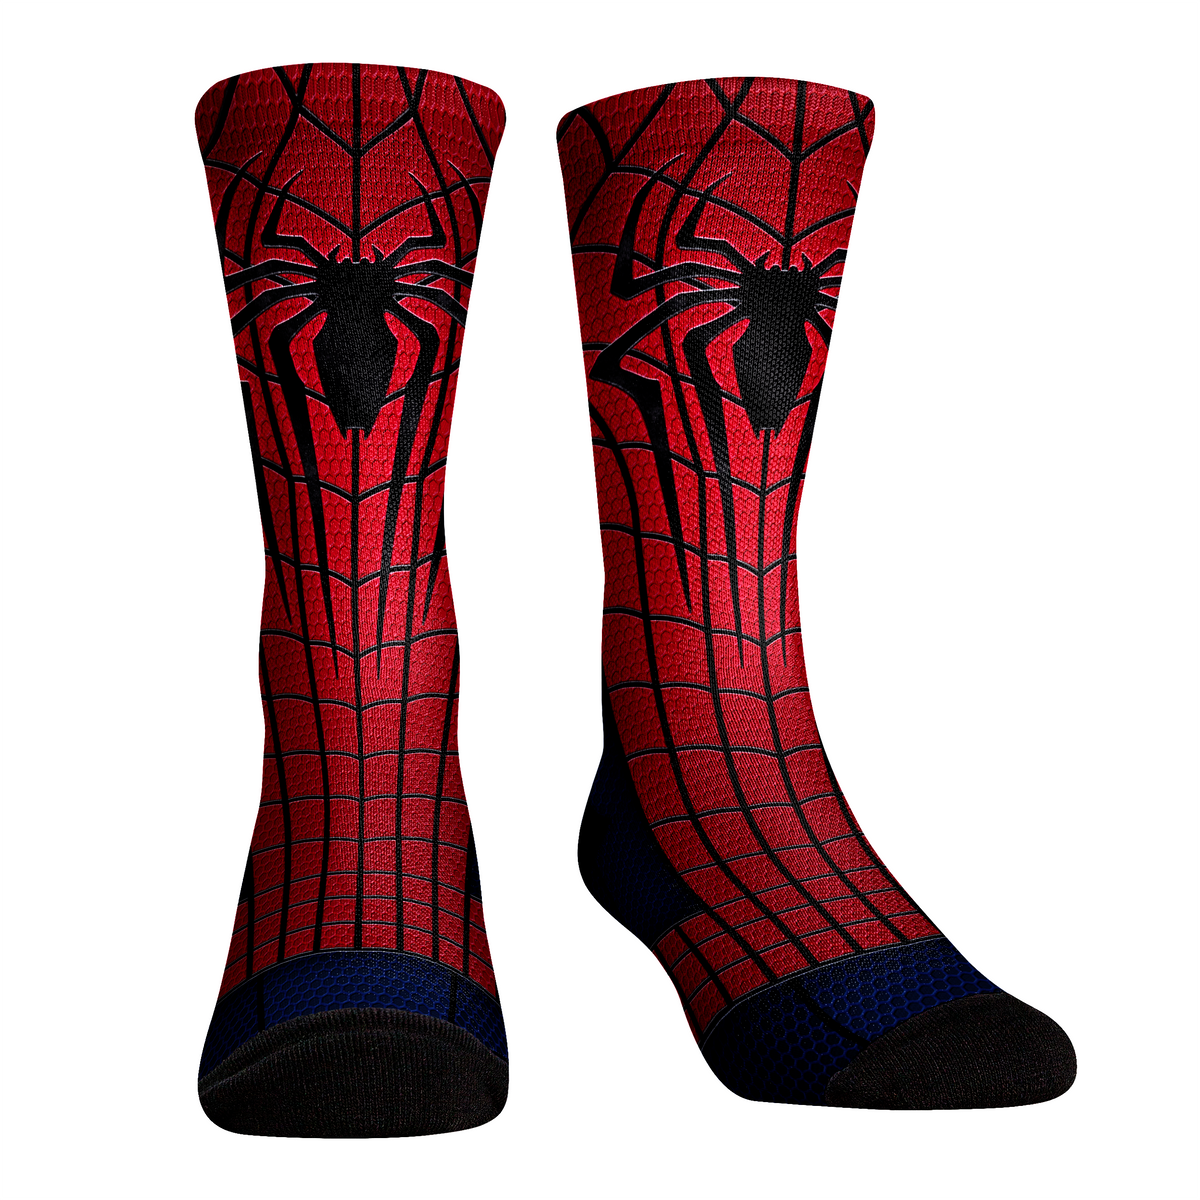 Spider-Man Socks - Amazing HyperSuit - Rock 'Em Socks - Marvel Socks